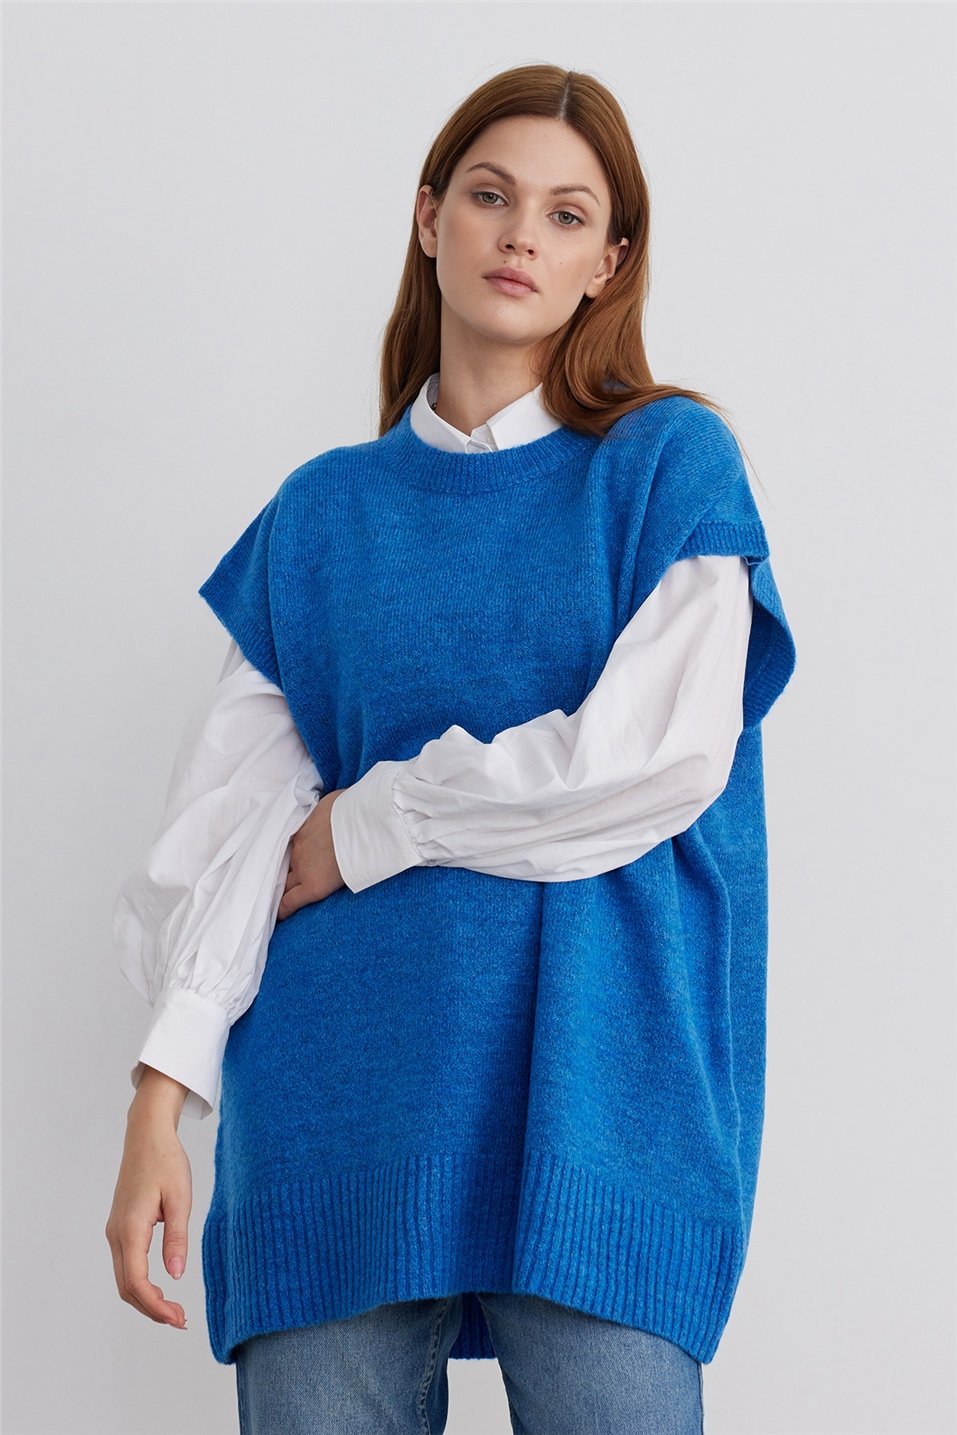 Blue Soft Textured Knitwear Sweater